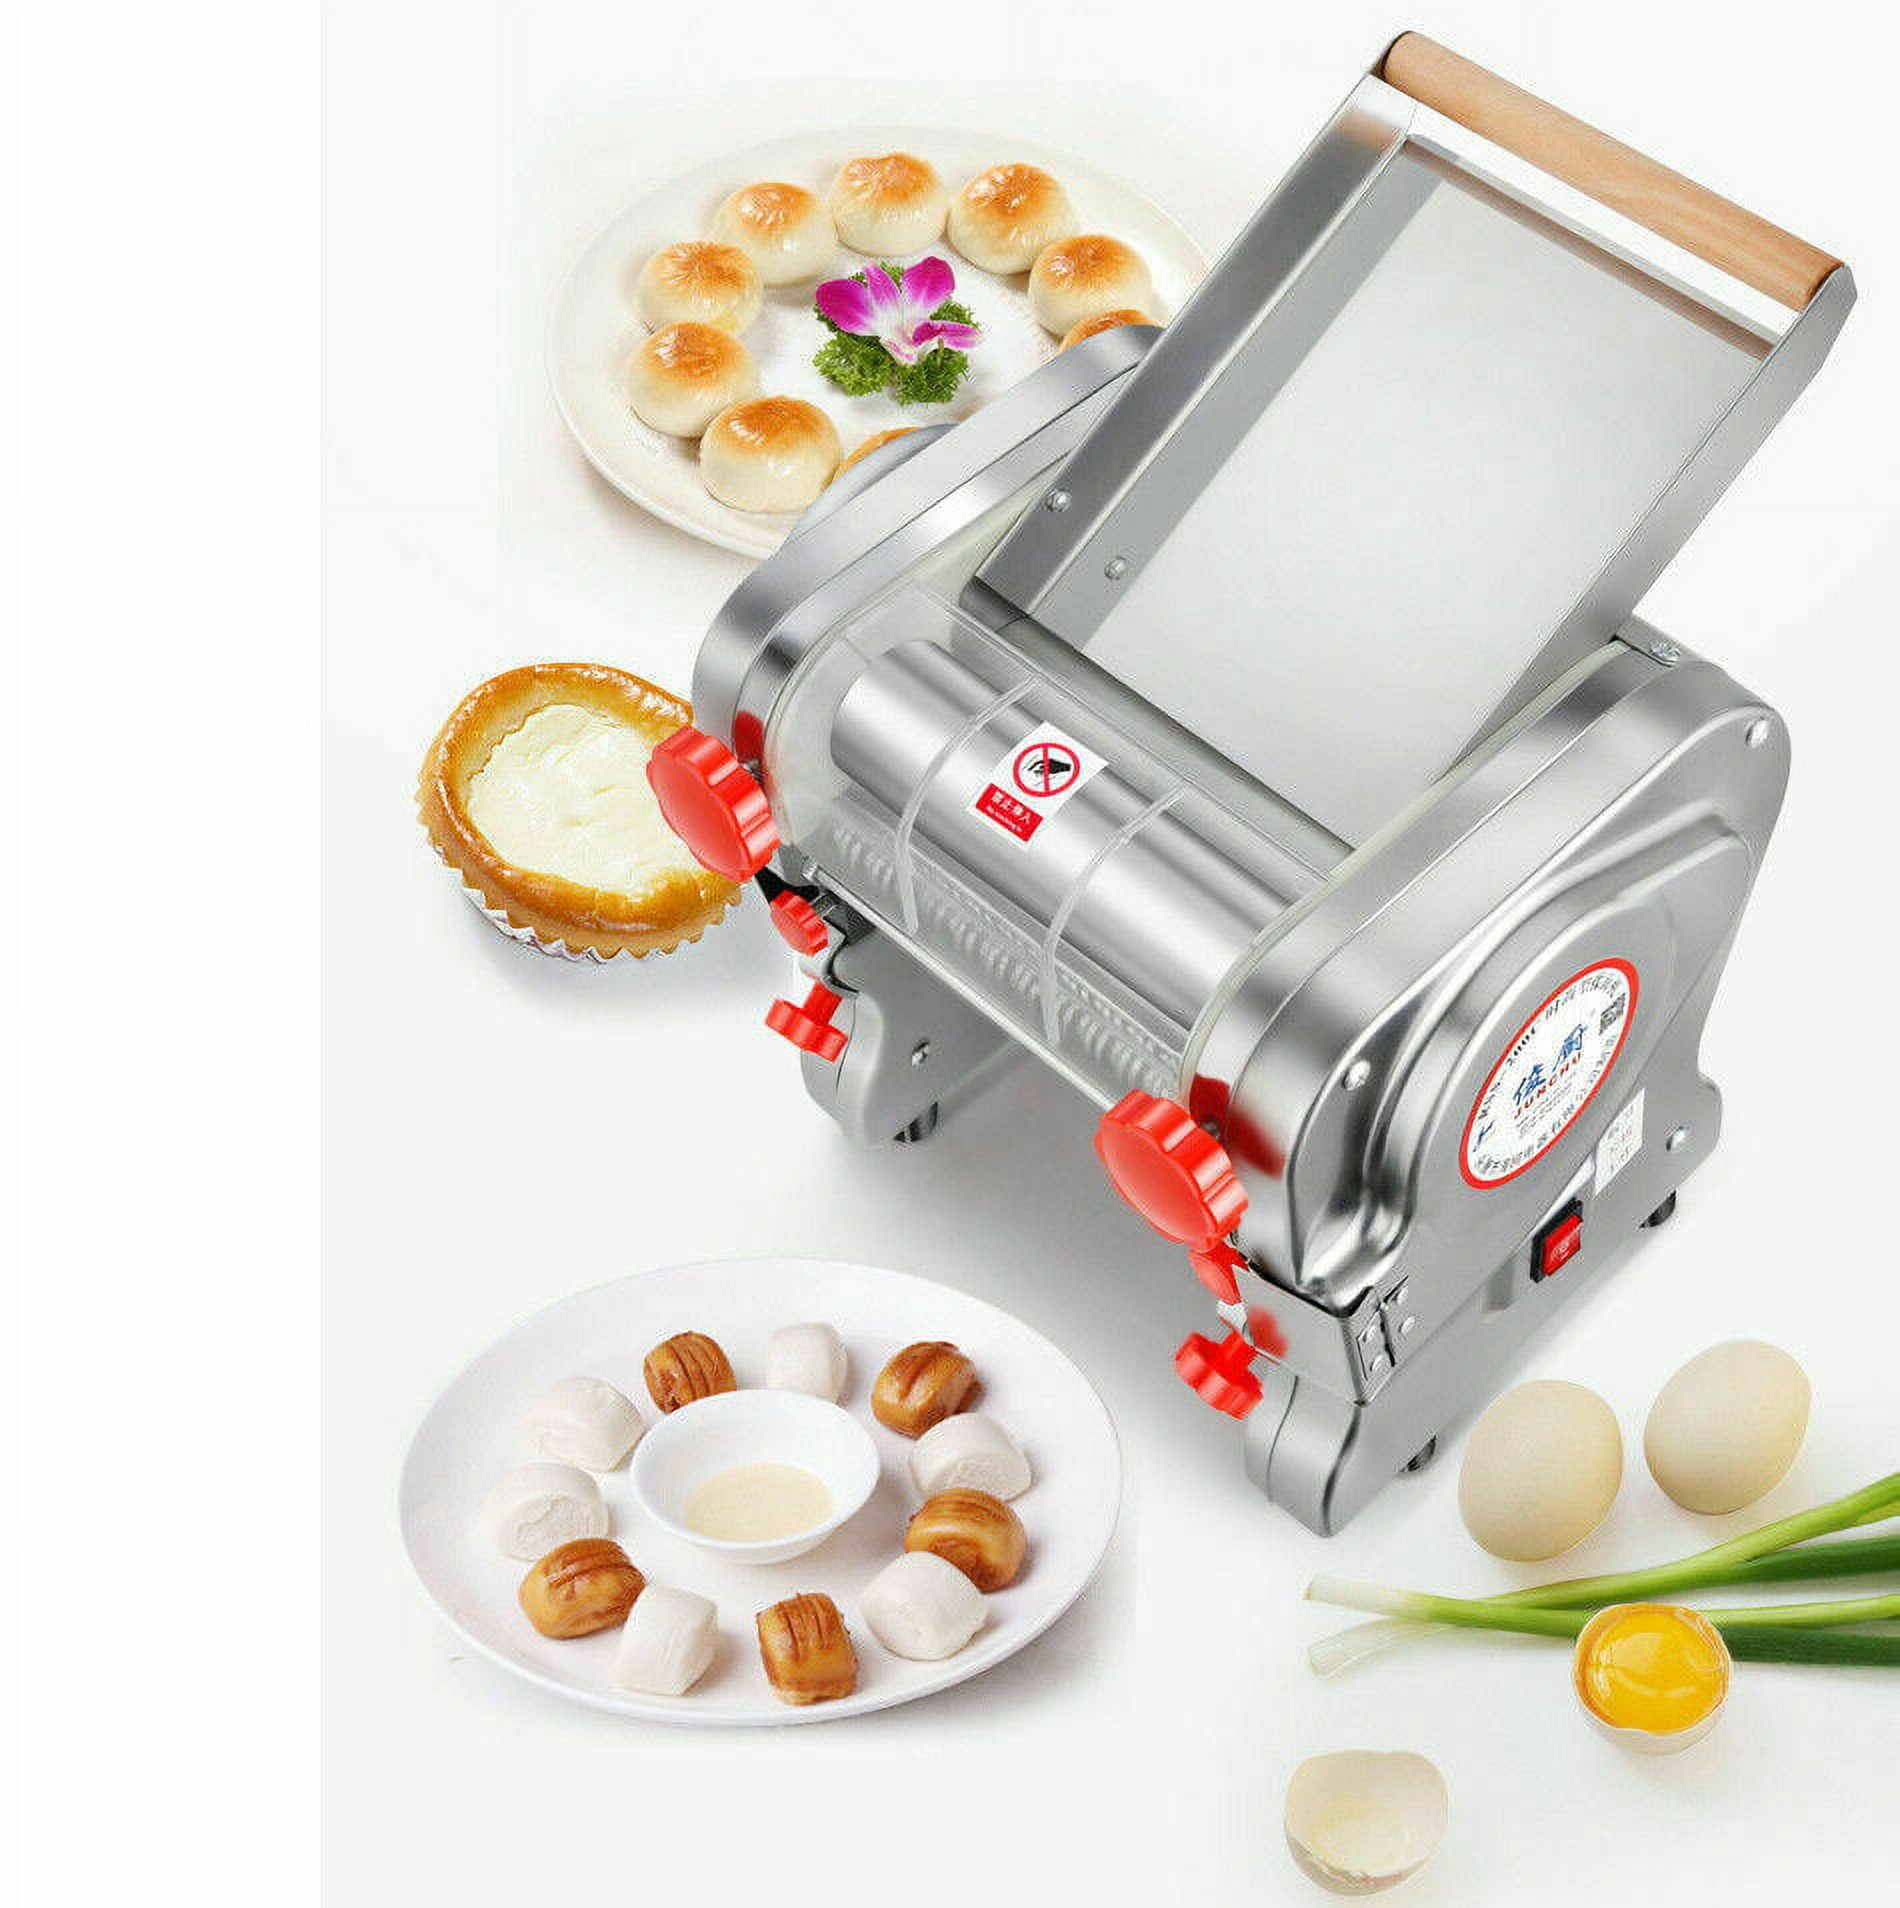 YMJOINMX Electric Pasta Maker Portable Automatic Pasta Maker Machine  Handheld Electric Pasta Noodle Maker Machine